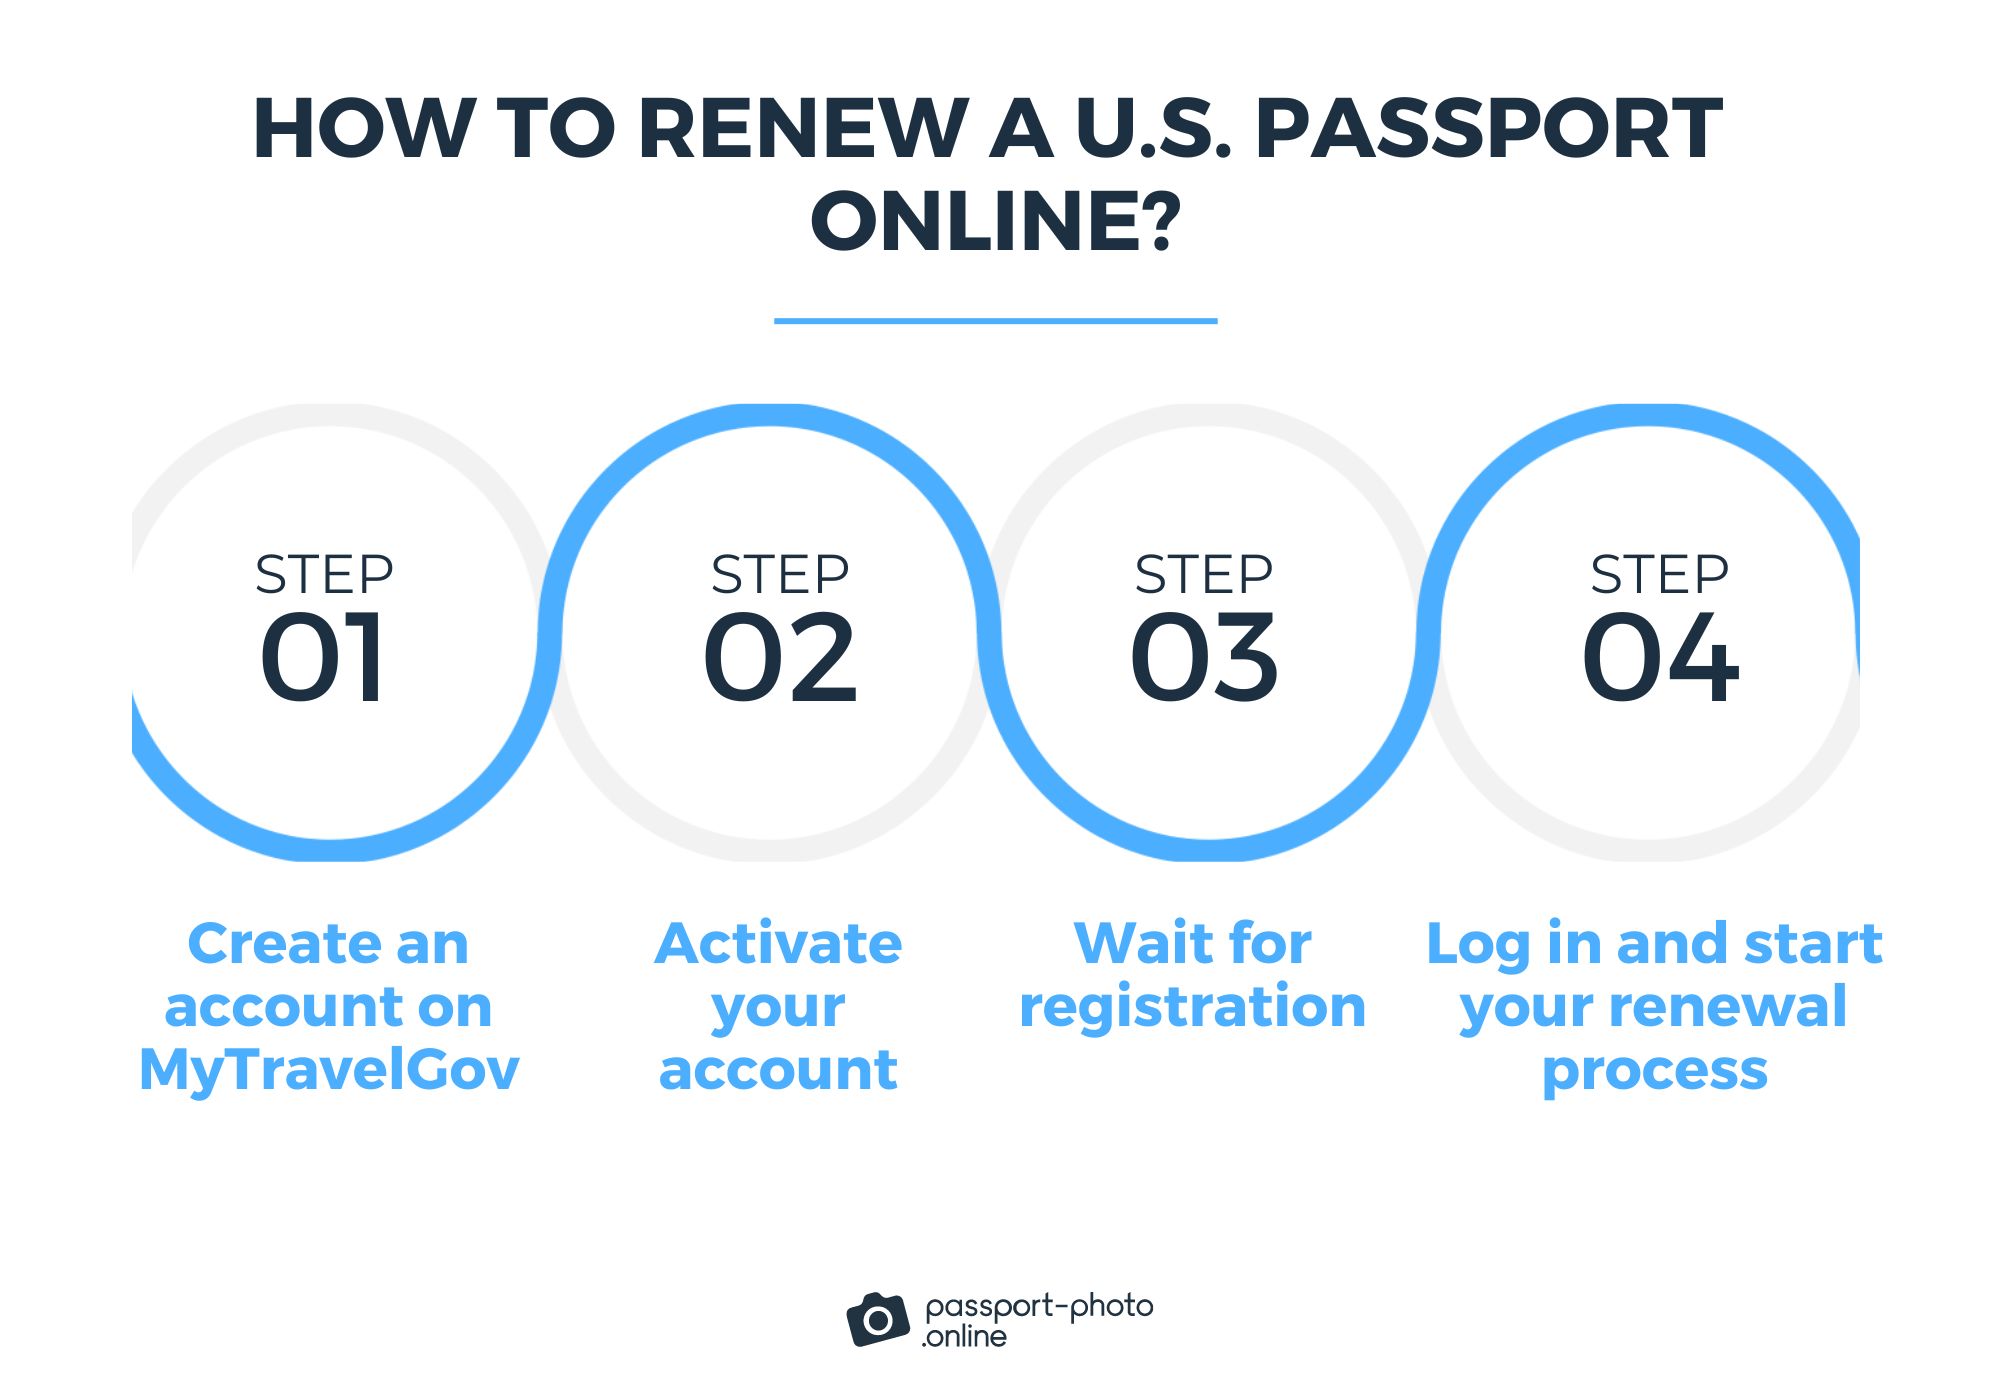 4 steps explaining how to renew a U.S. passport online.